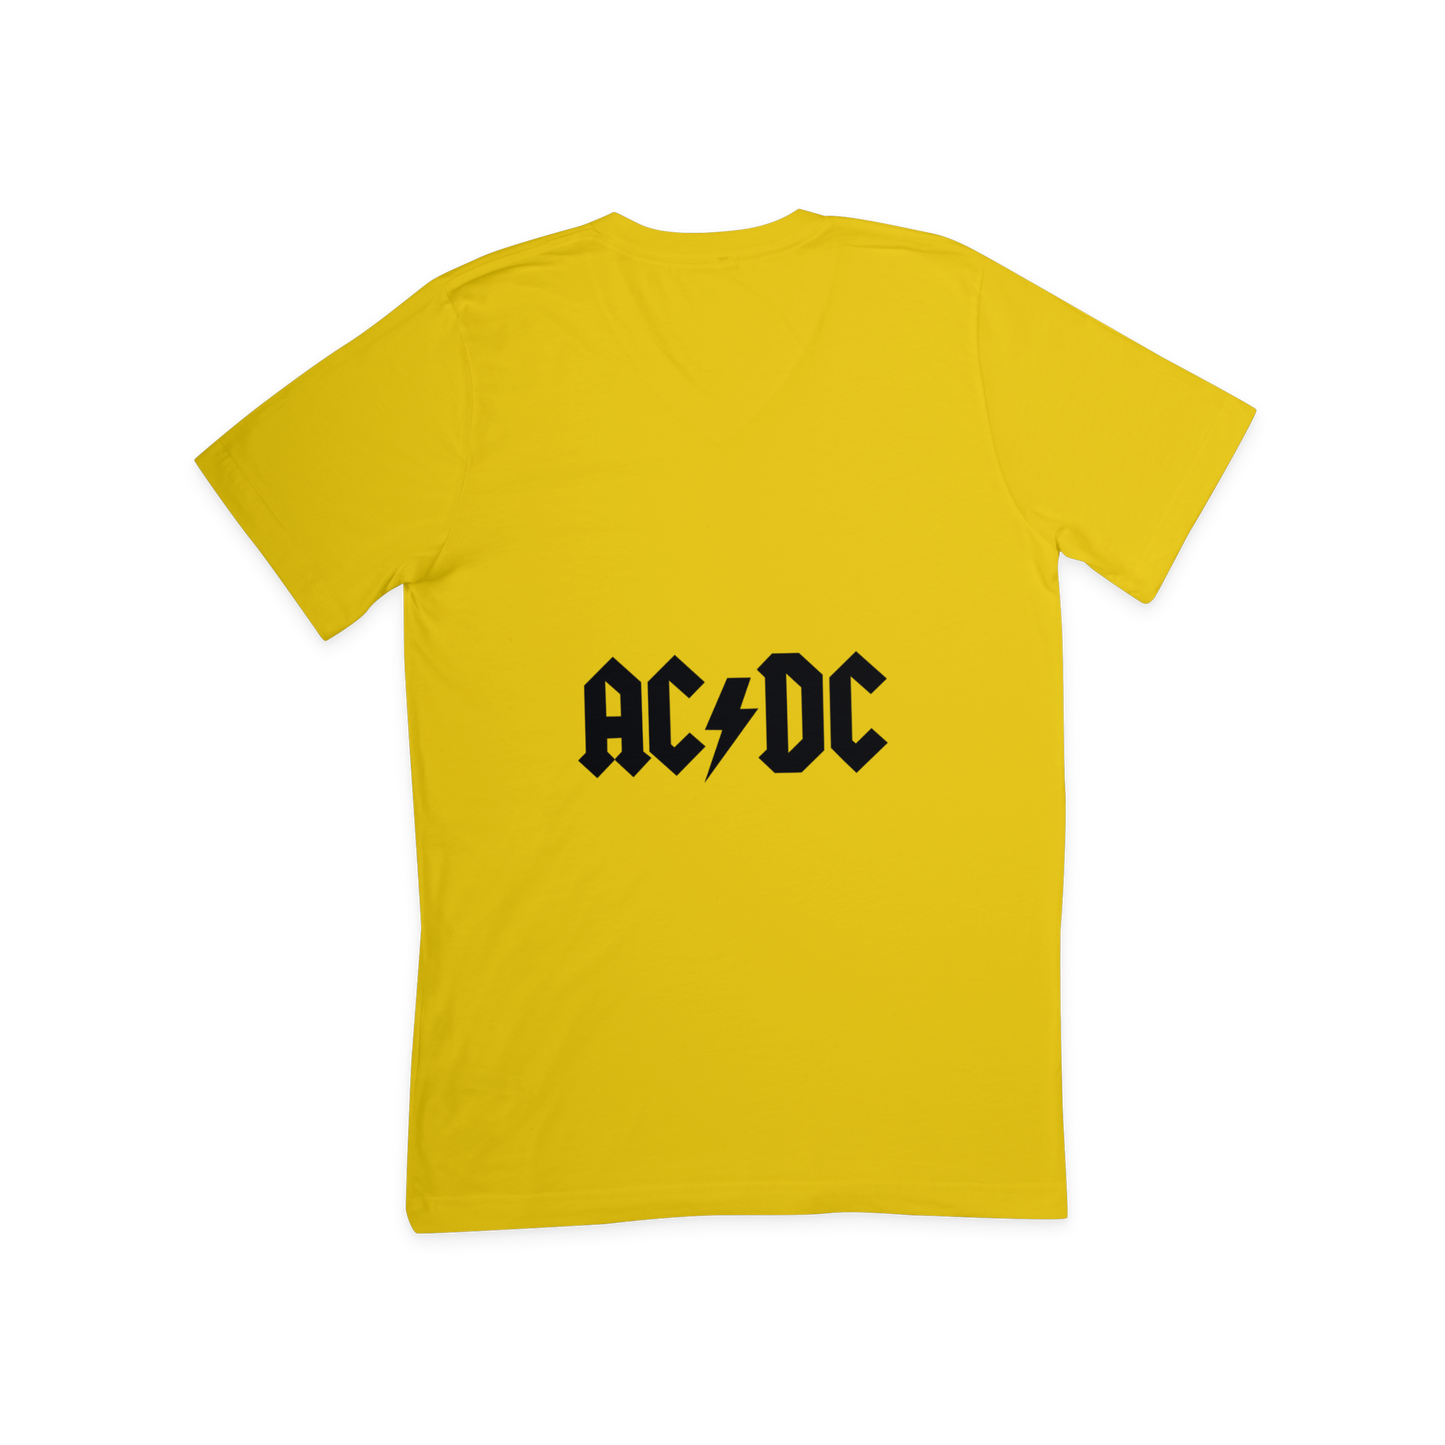 AC DC design T shirt